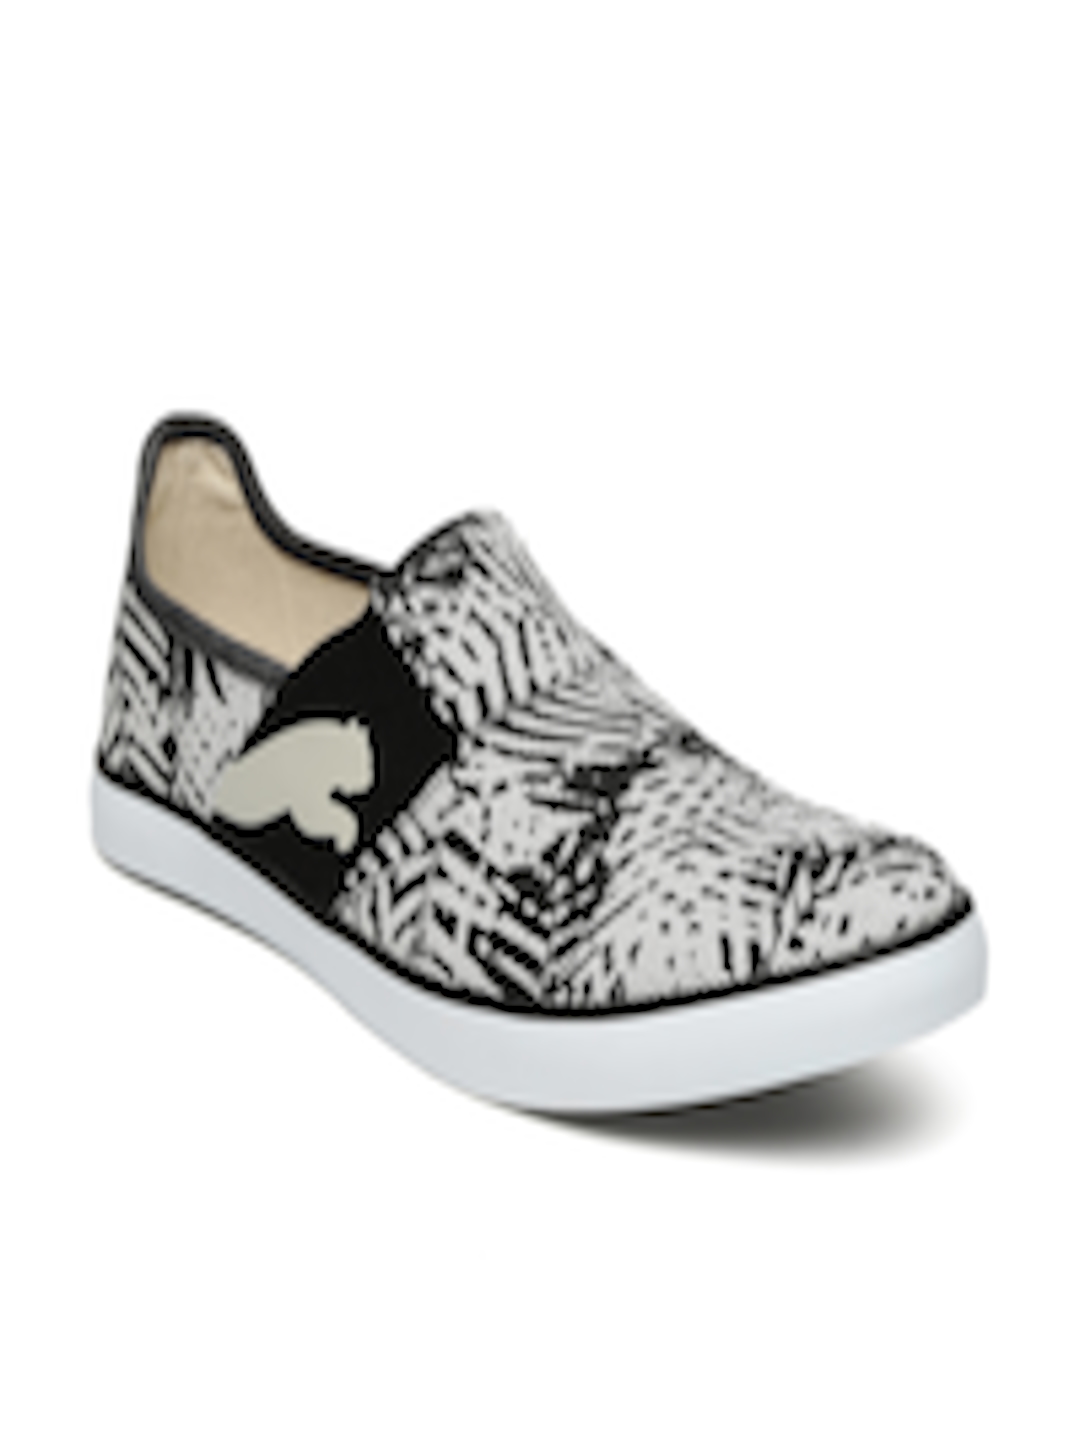 Buy PUMA Unisex White & Black Printed Lazy Slip On Sneakers - Casual ...